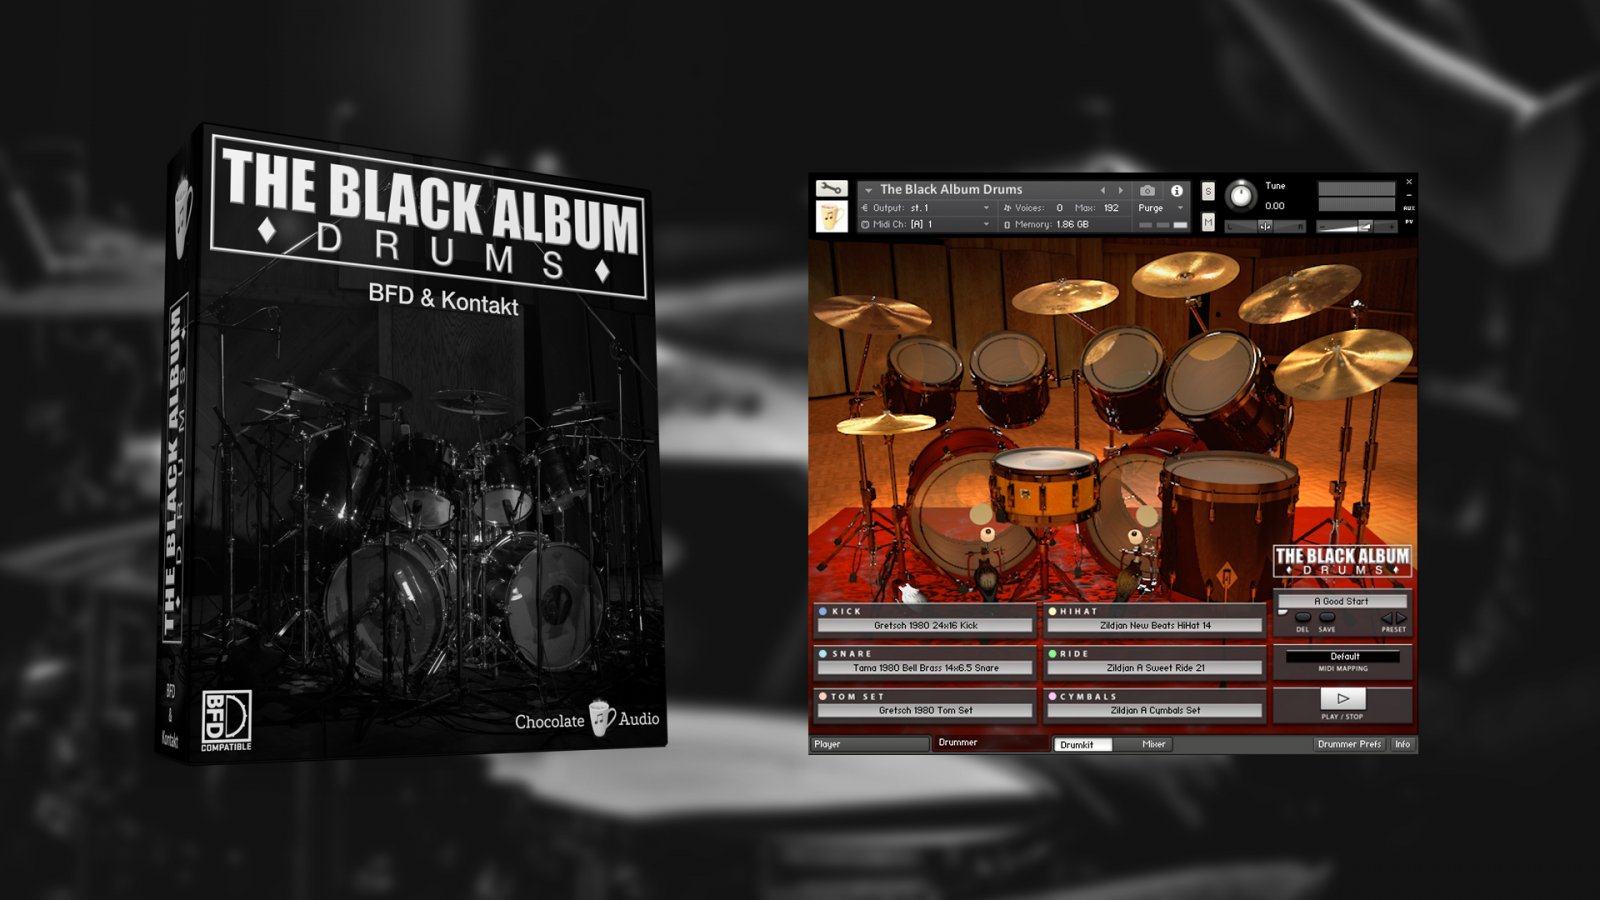 Chocolate Audio The Black Album Drums (BFD3 & Kontakt)